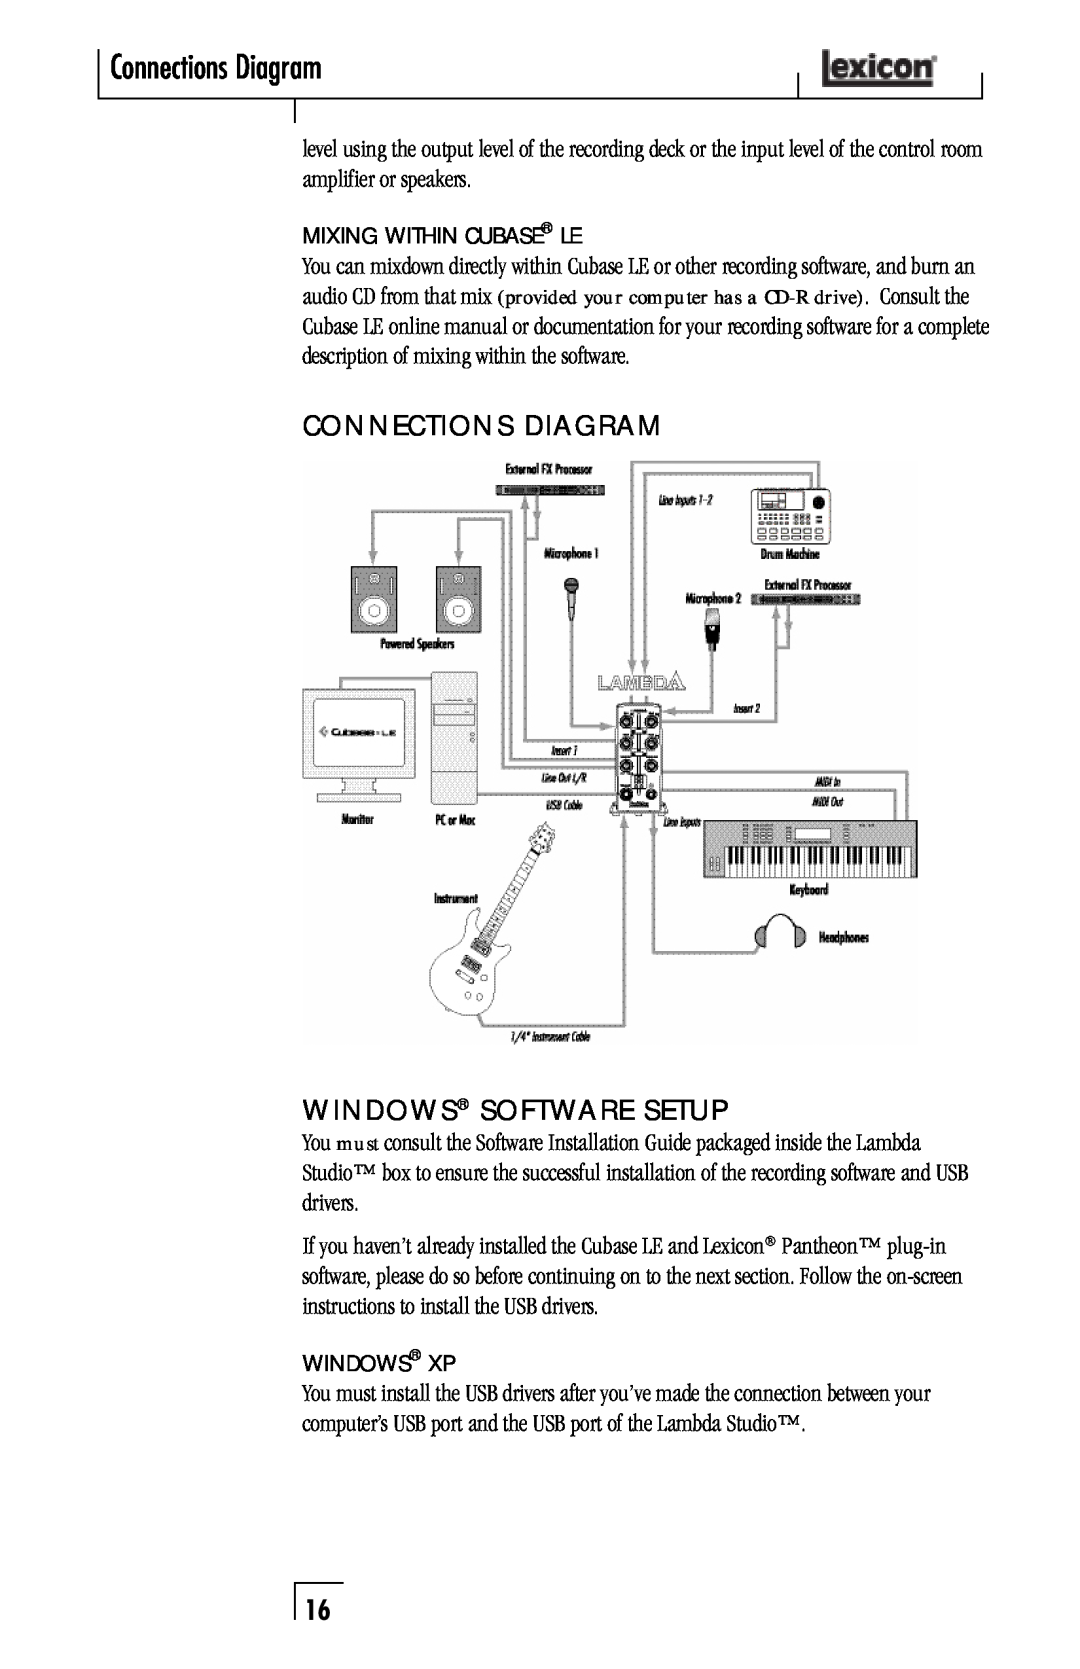 Lexicon Lambda Desktop Recording Studio owner manual Connections Diagram, connections DiaGram WinDows Software setup 